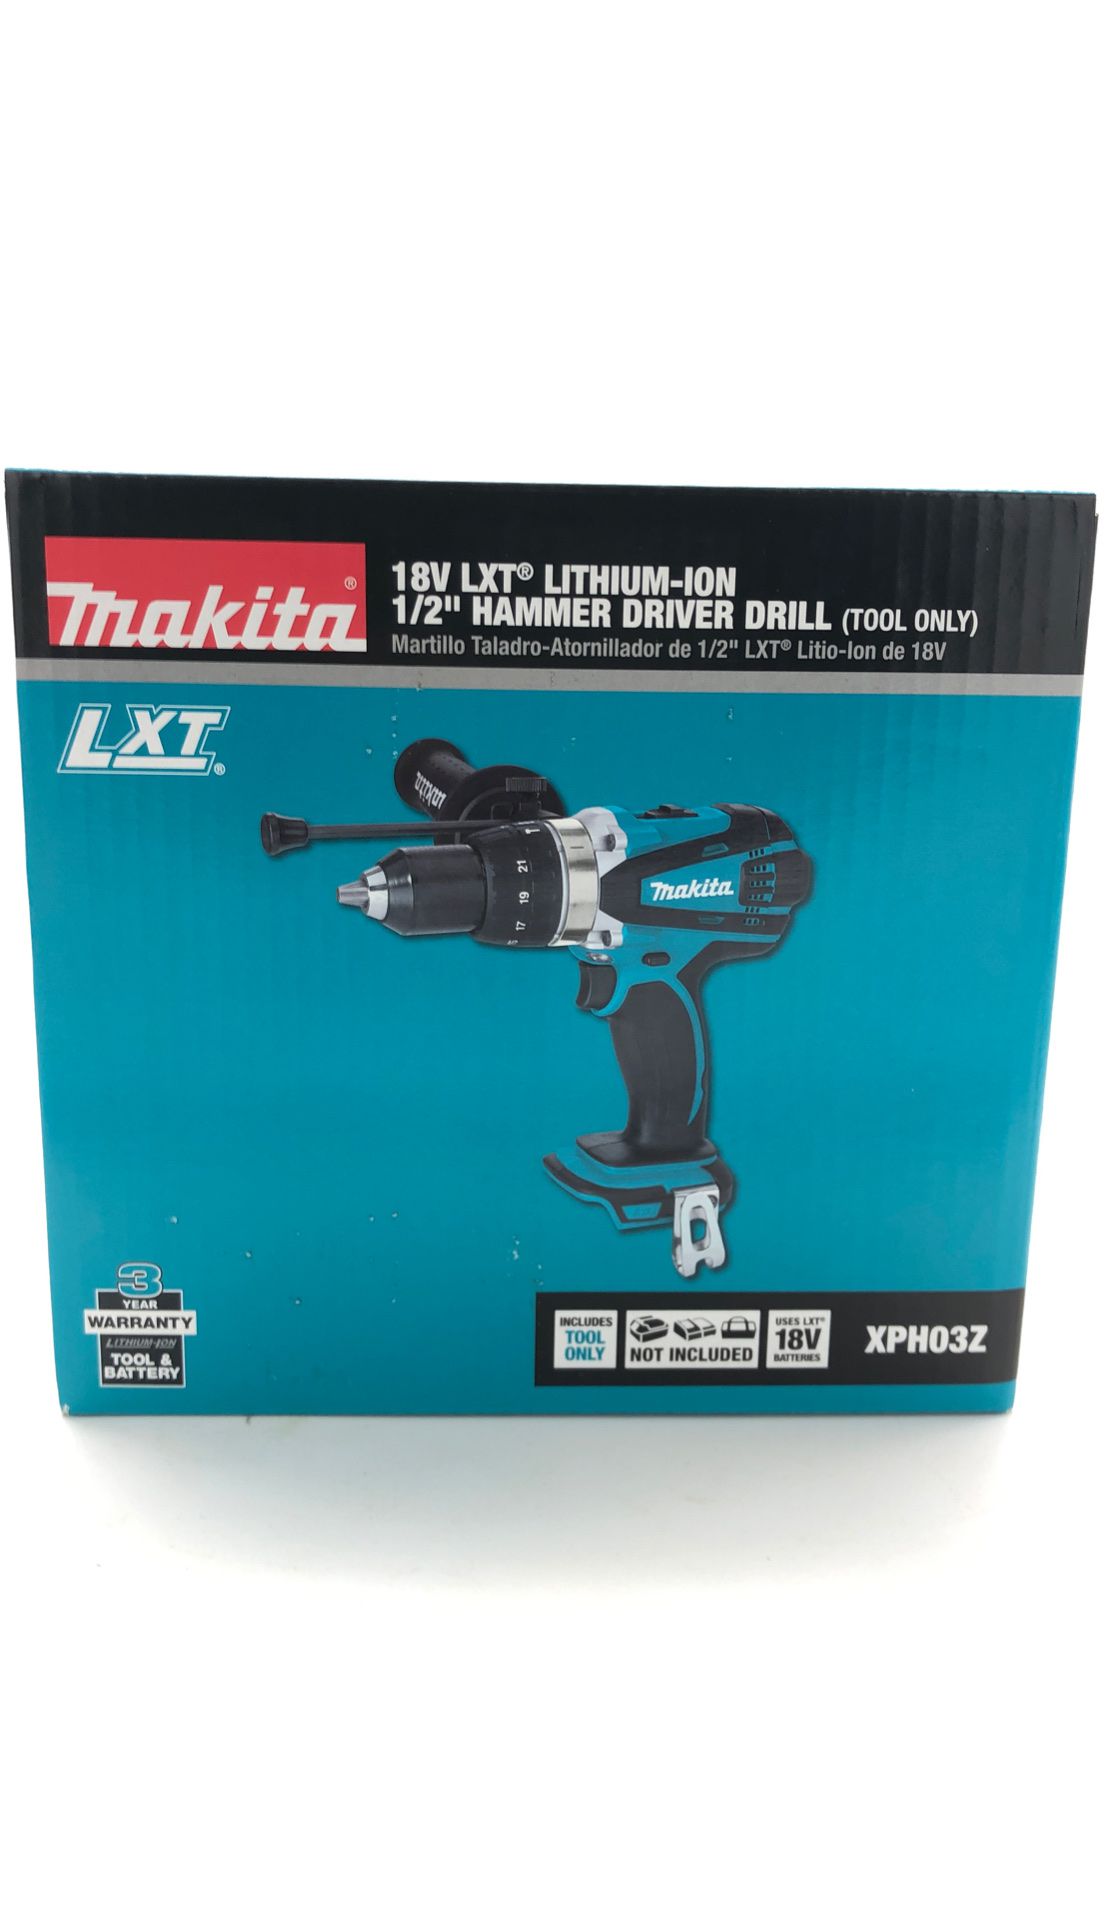 Makita XPH03Z 18v Hammer Drill Tool Only